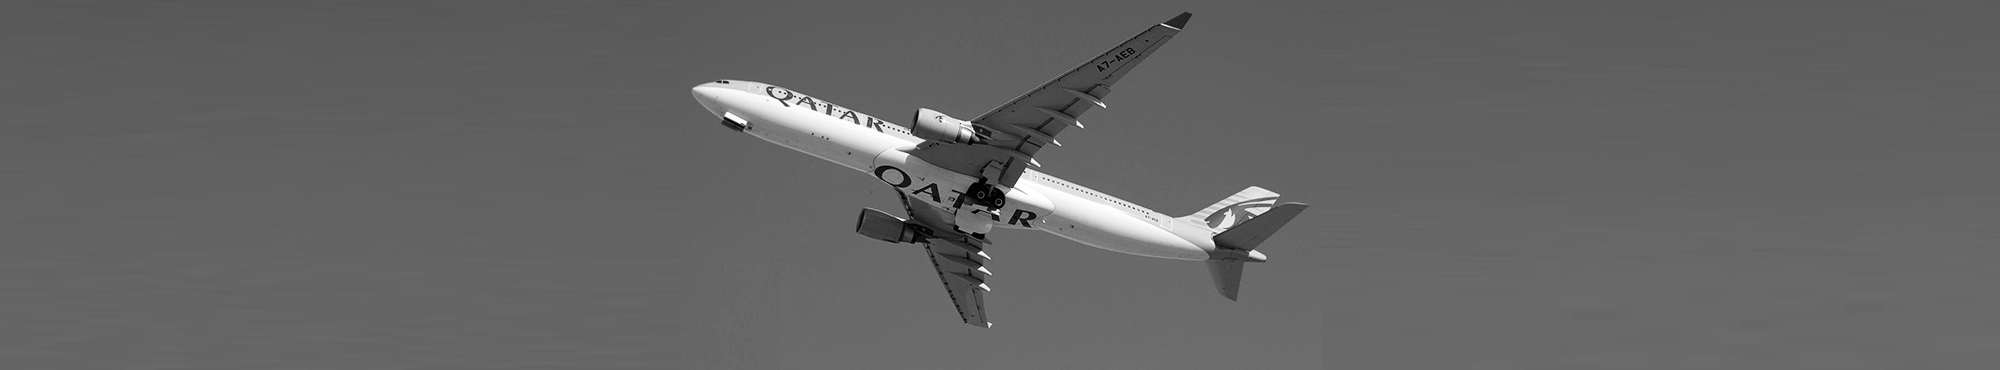 Qatar Airways abre uma janela de oportunidades a Portugal